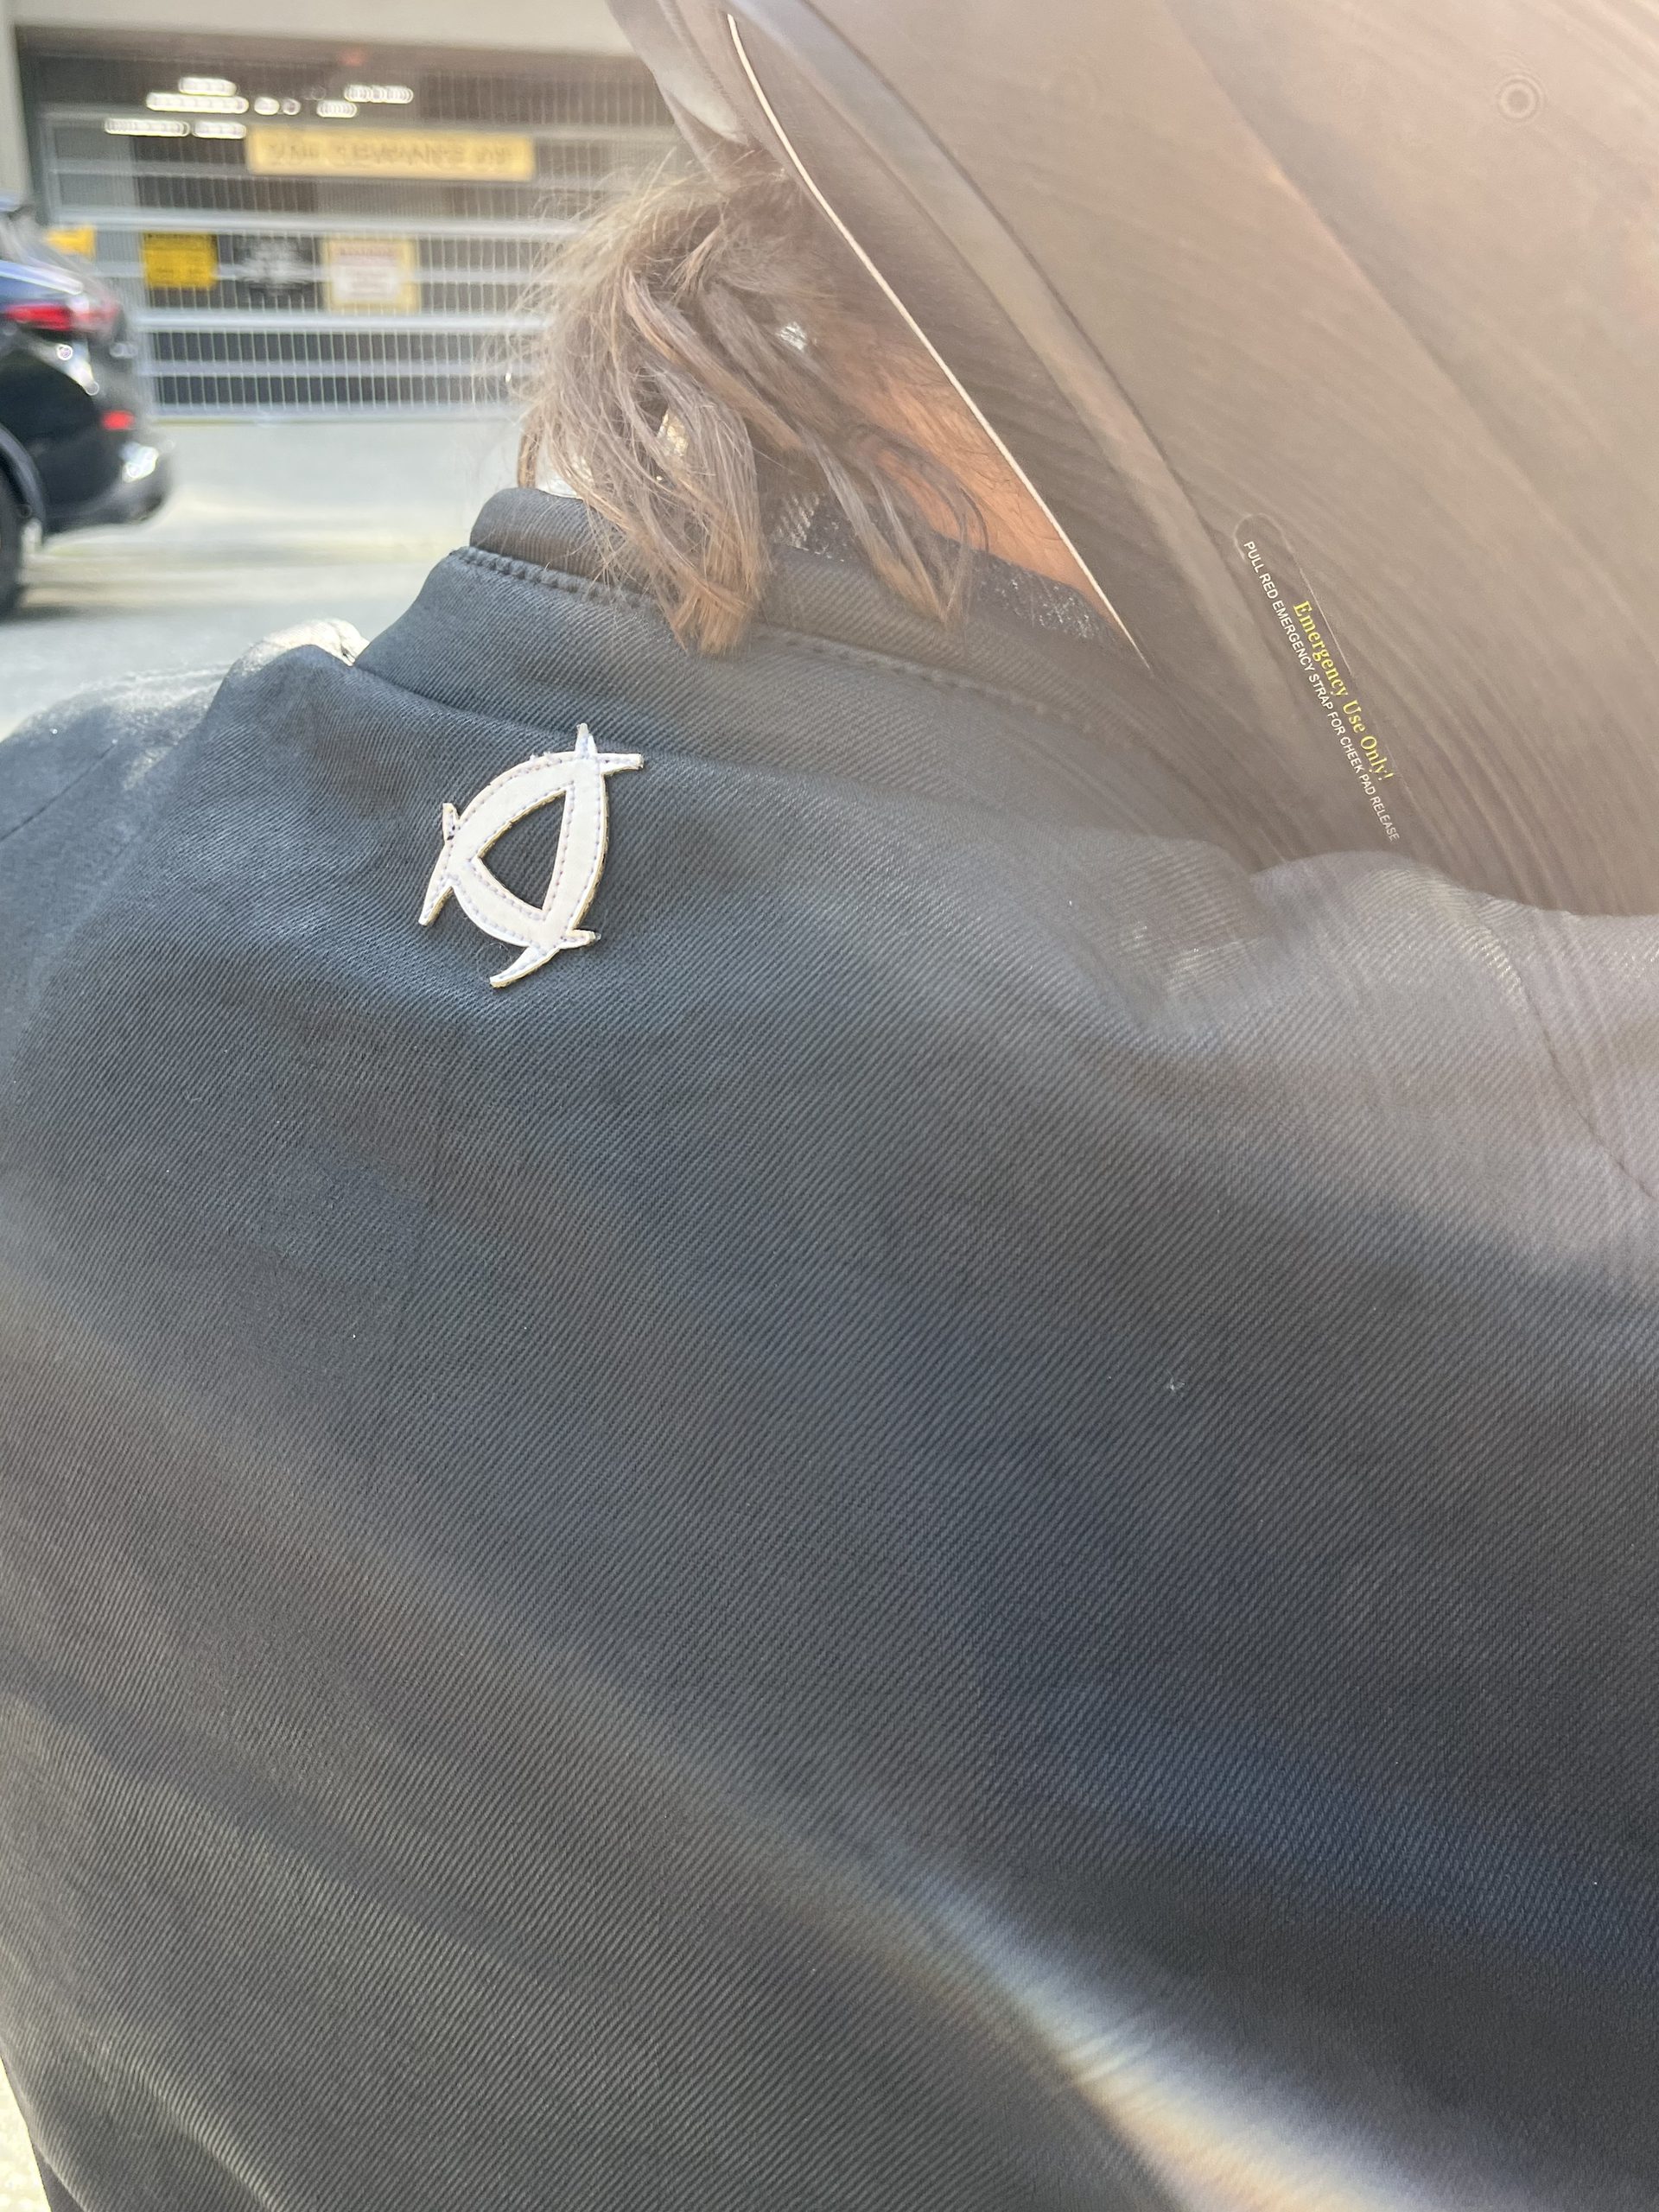 Close-up of Andromeda Moto logo on Neowise Jacket